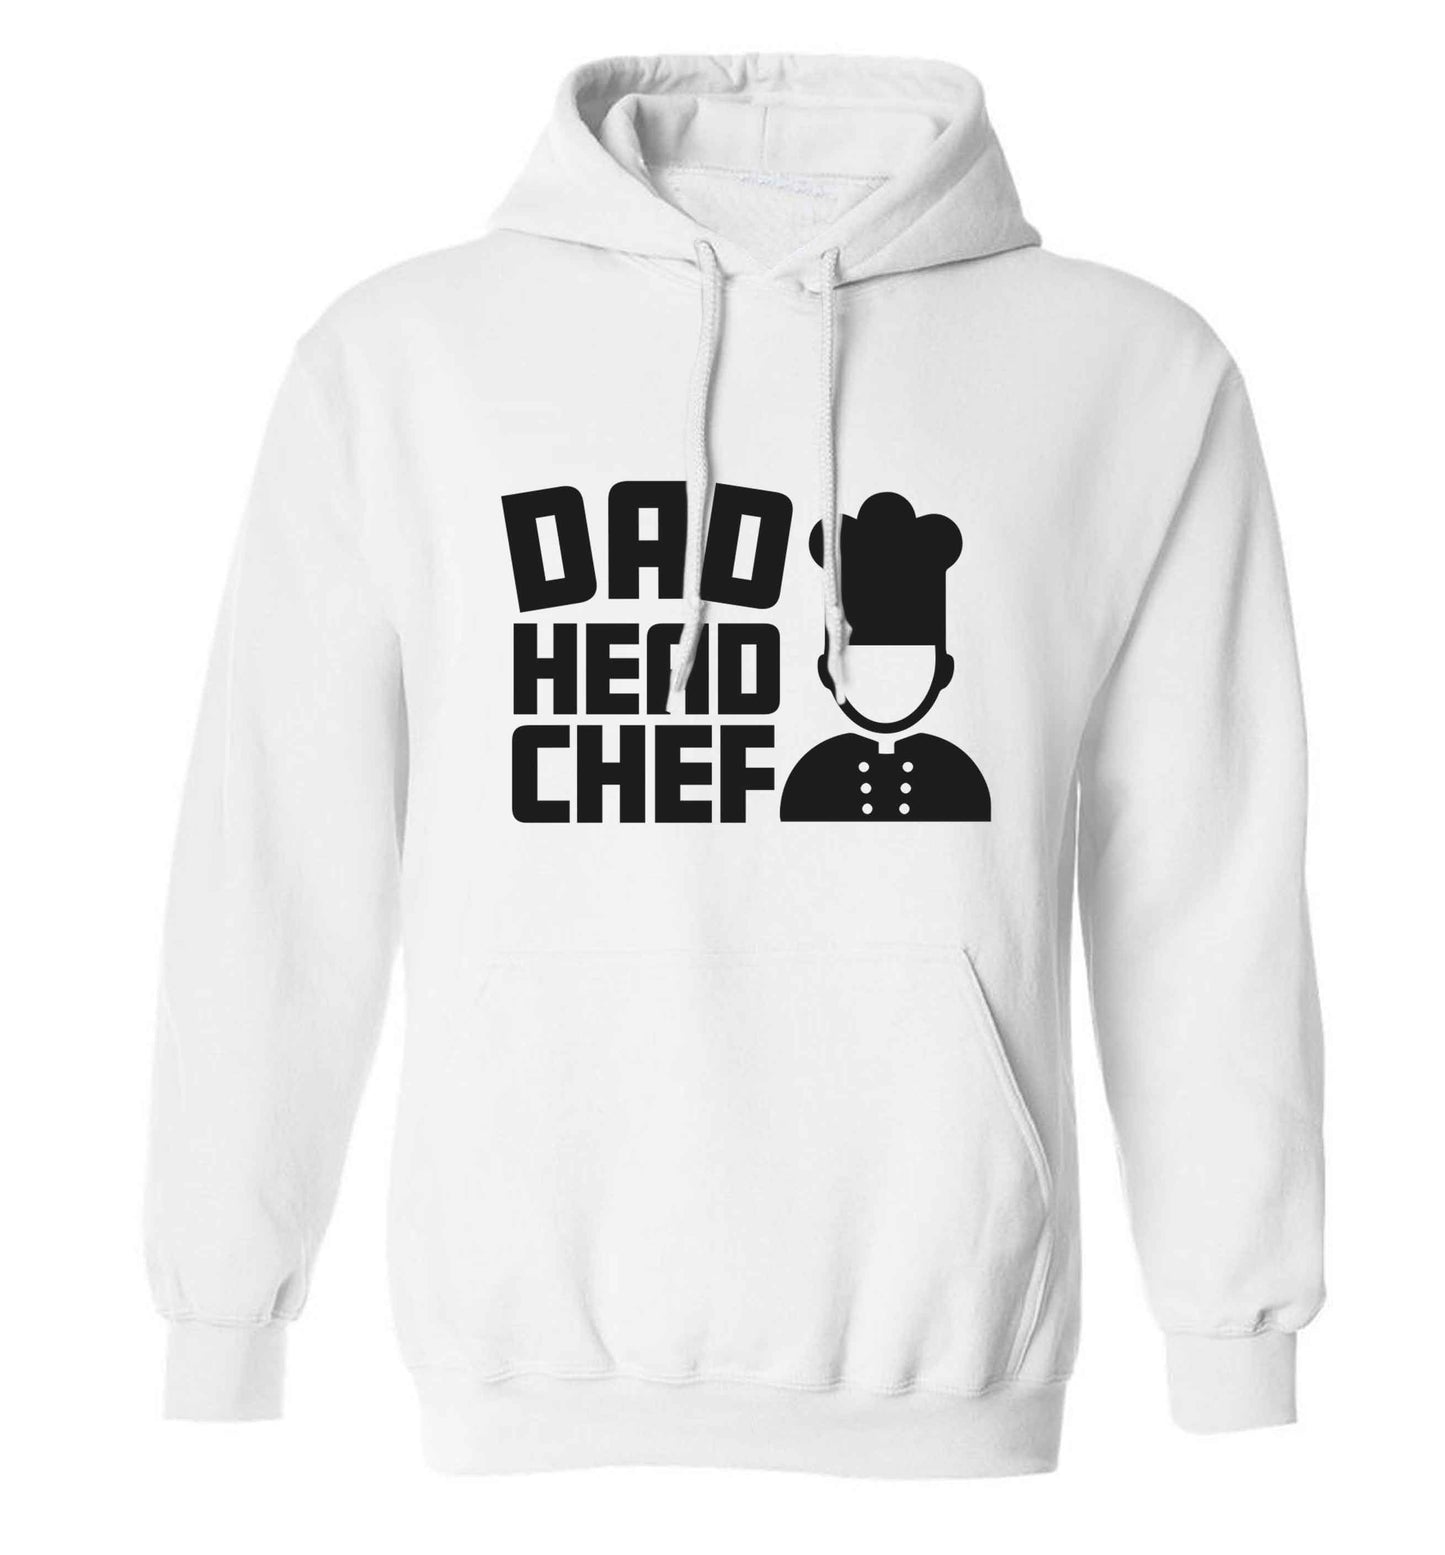 Dad head chef adults unisex white hoodie 2XL